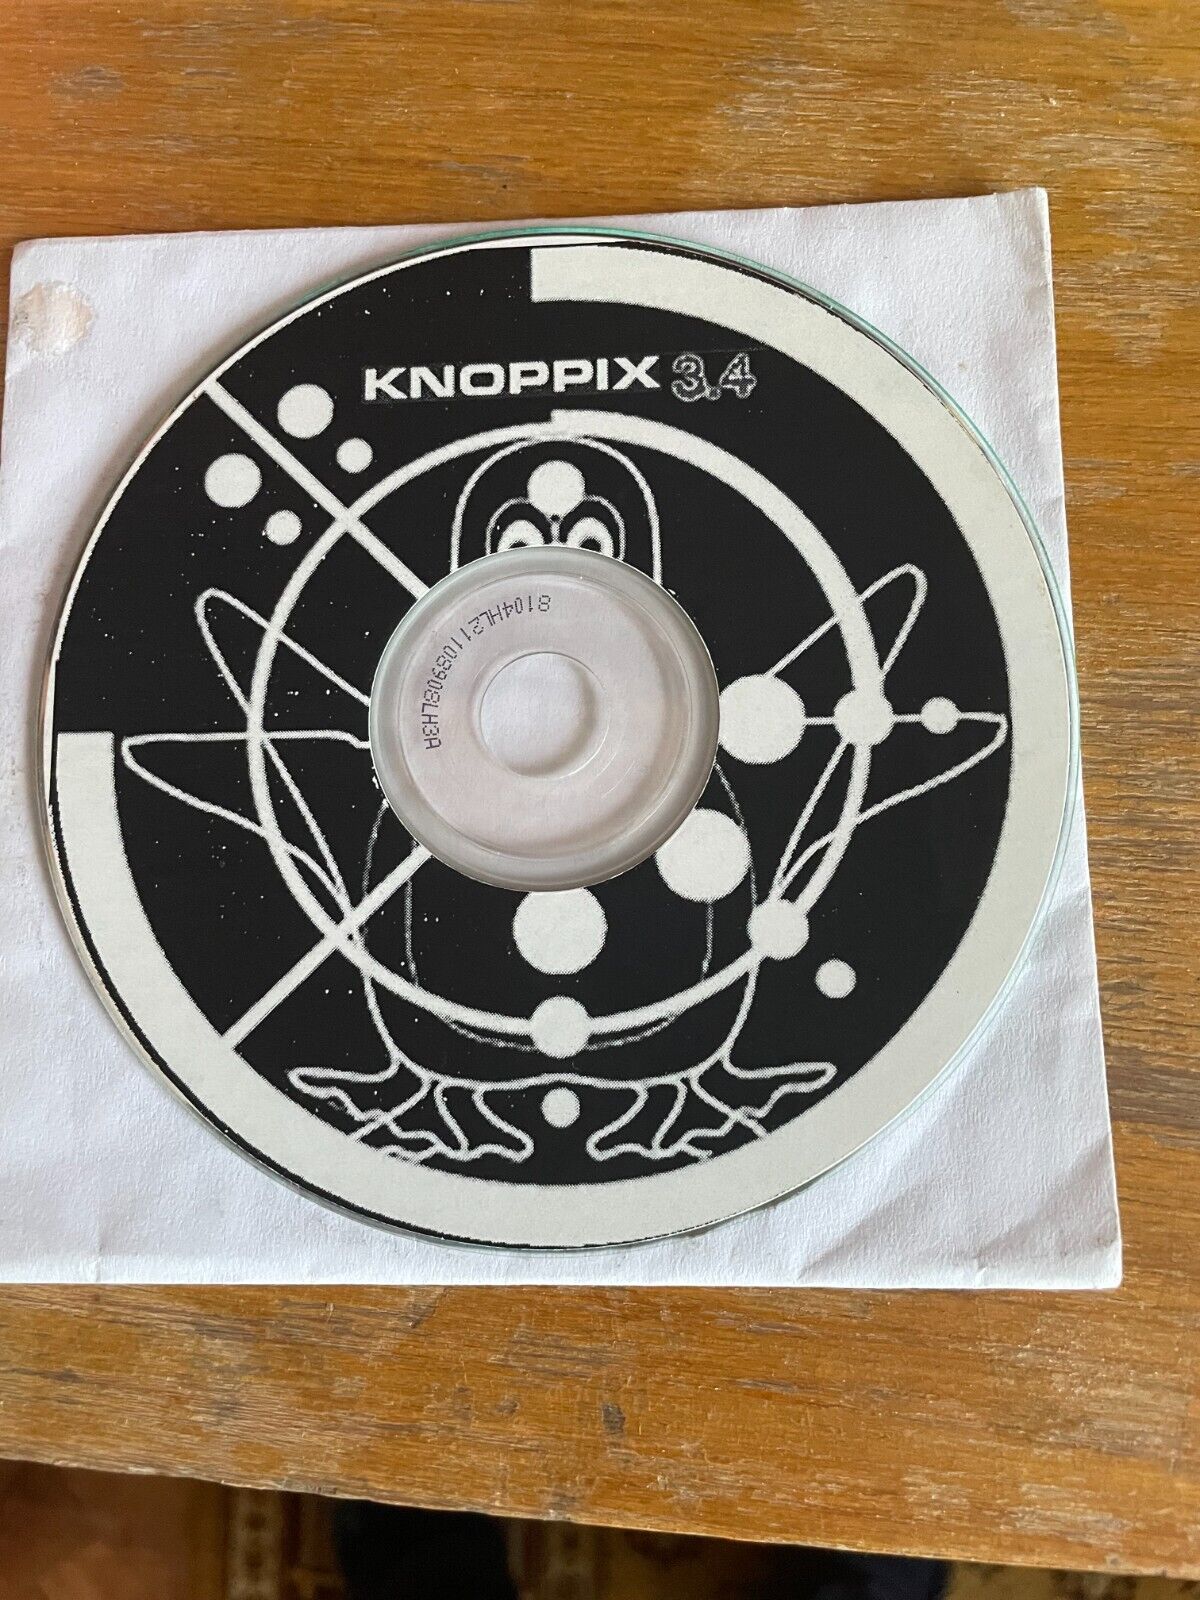 Knoppix 3.4 Linux installation CD